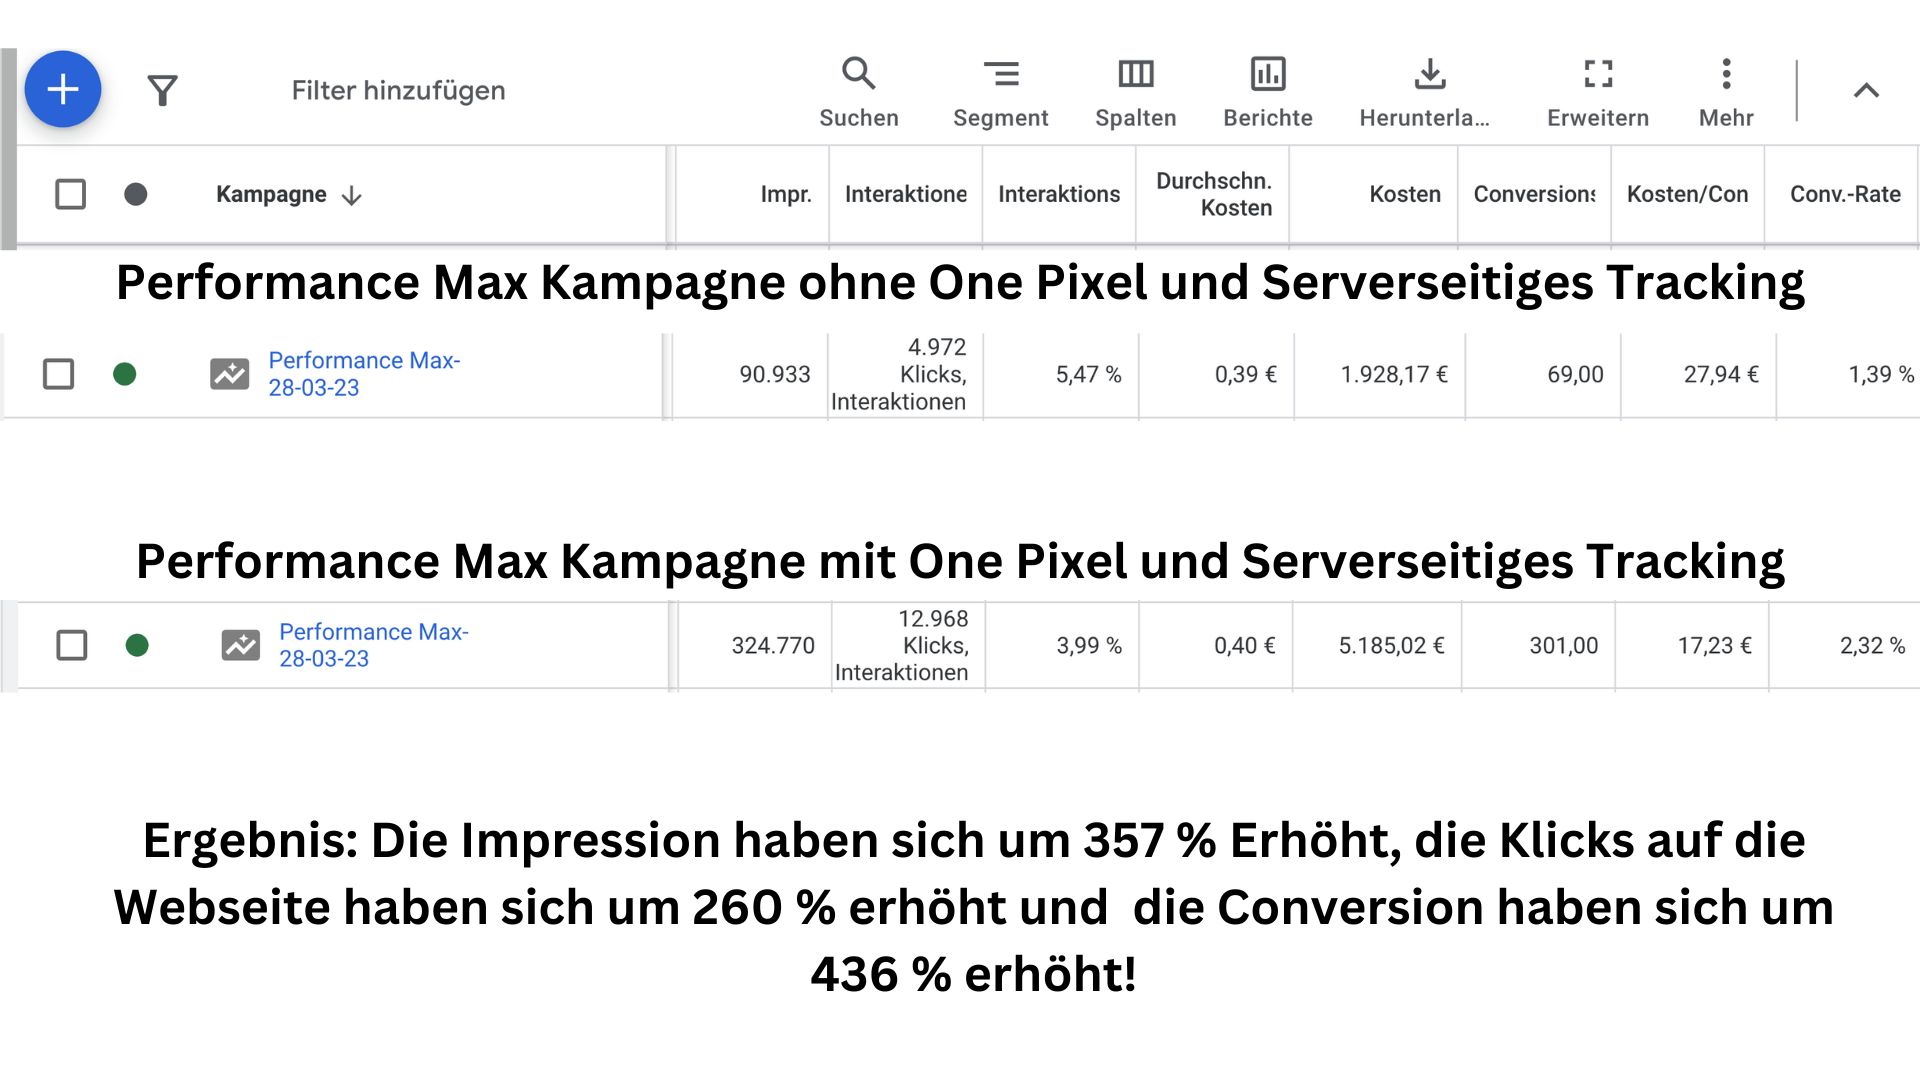 Performance Max Kampagne ohne One Pixel und Serverseitiges Tracking